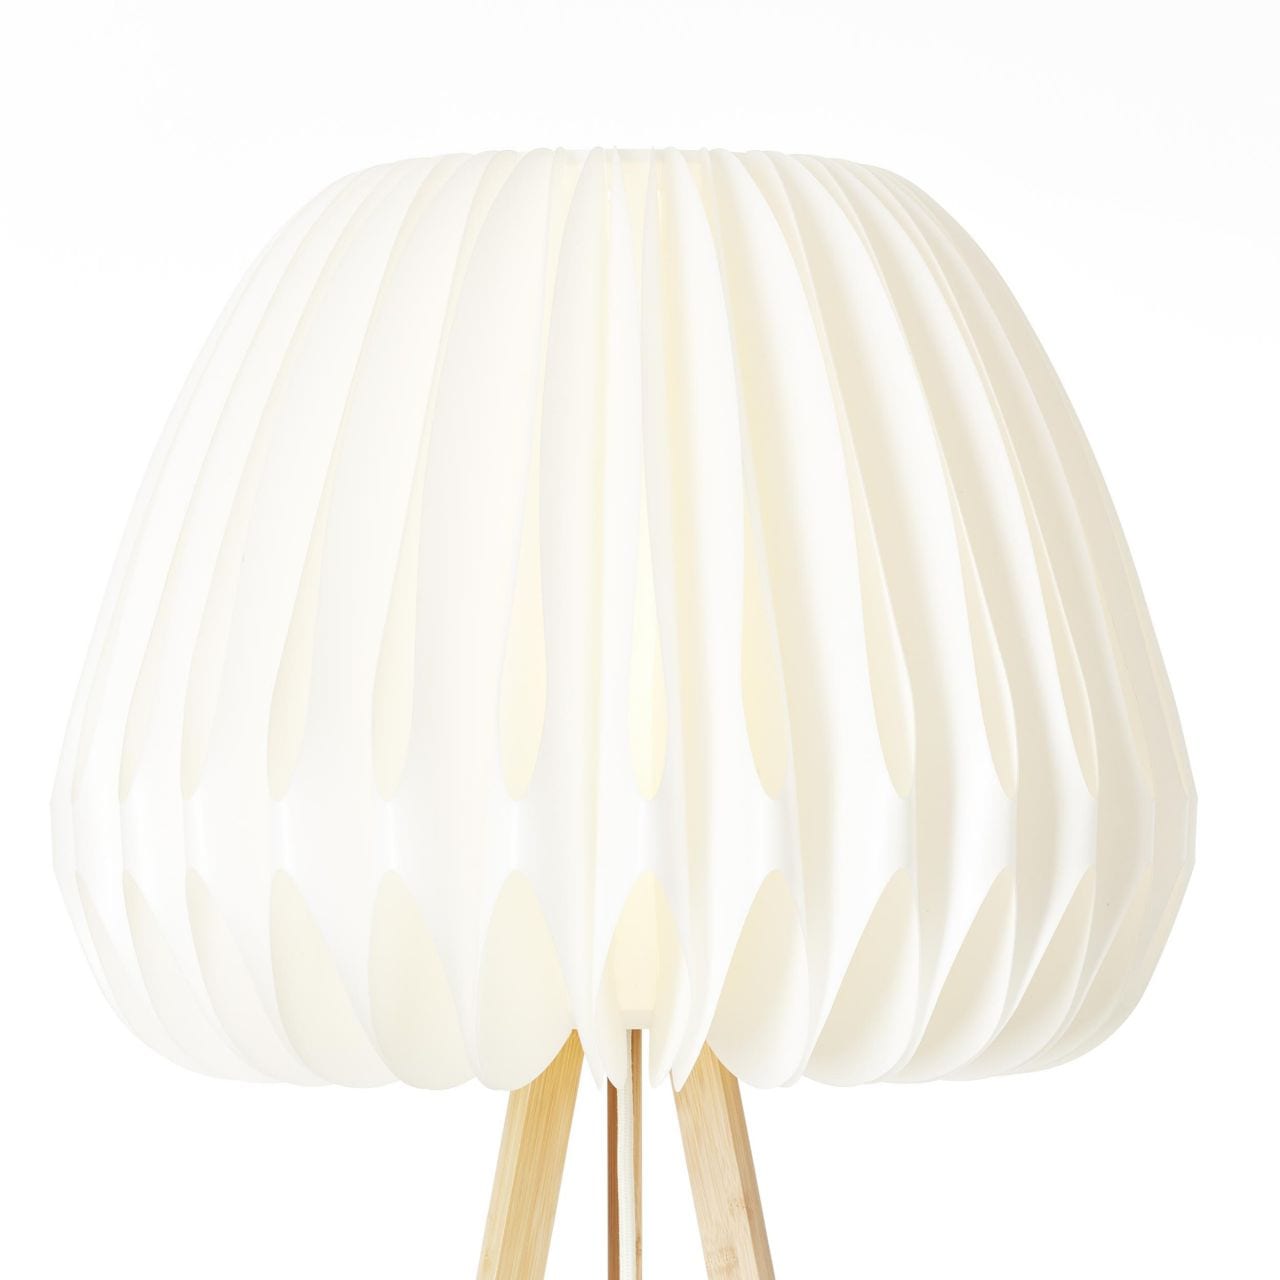 Brilliant Stehlampe »Inna«, 1 flammig-flammig, 155 cm Höhe, Ø 62 cm, E27, Bambus/Kunststoff, holz hell/weiss